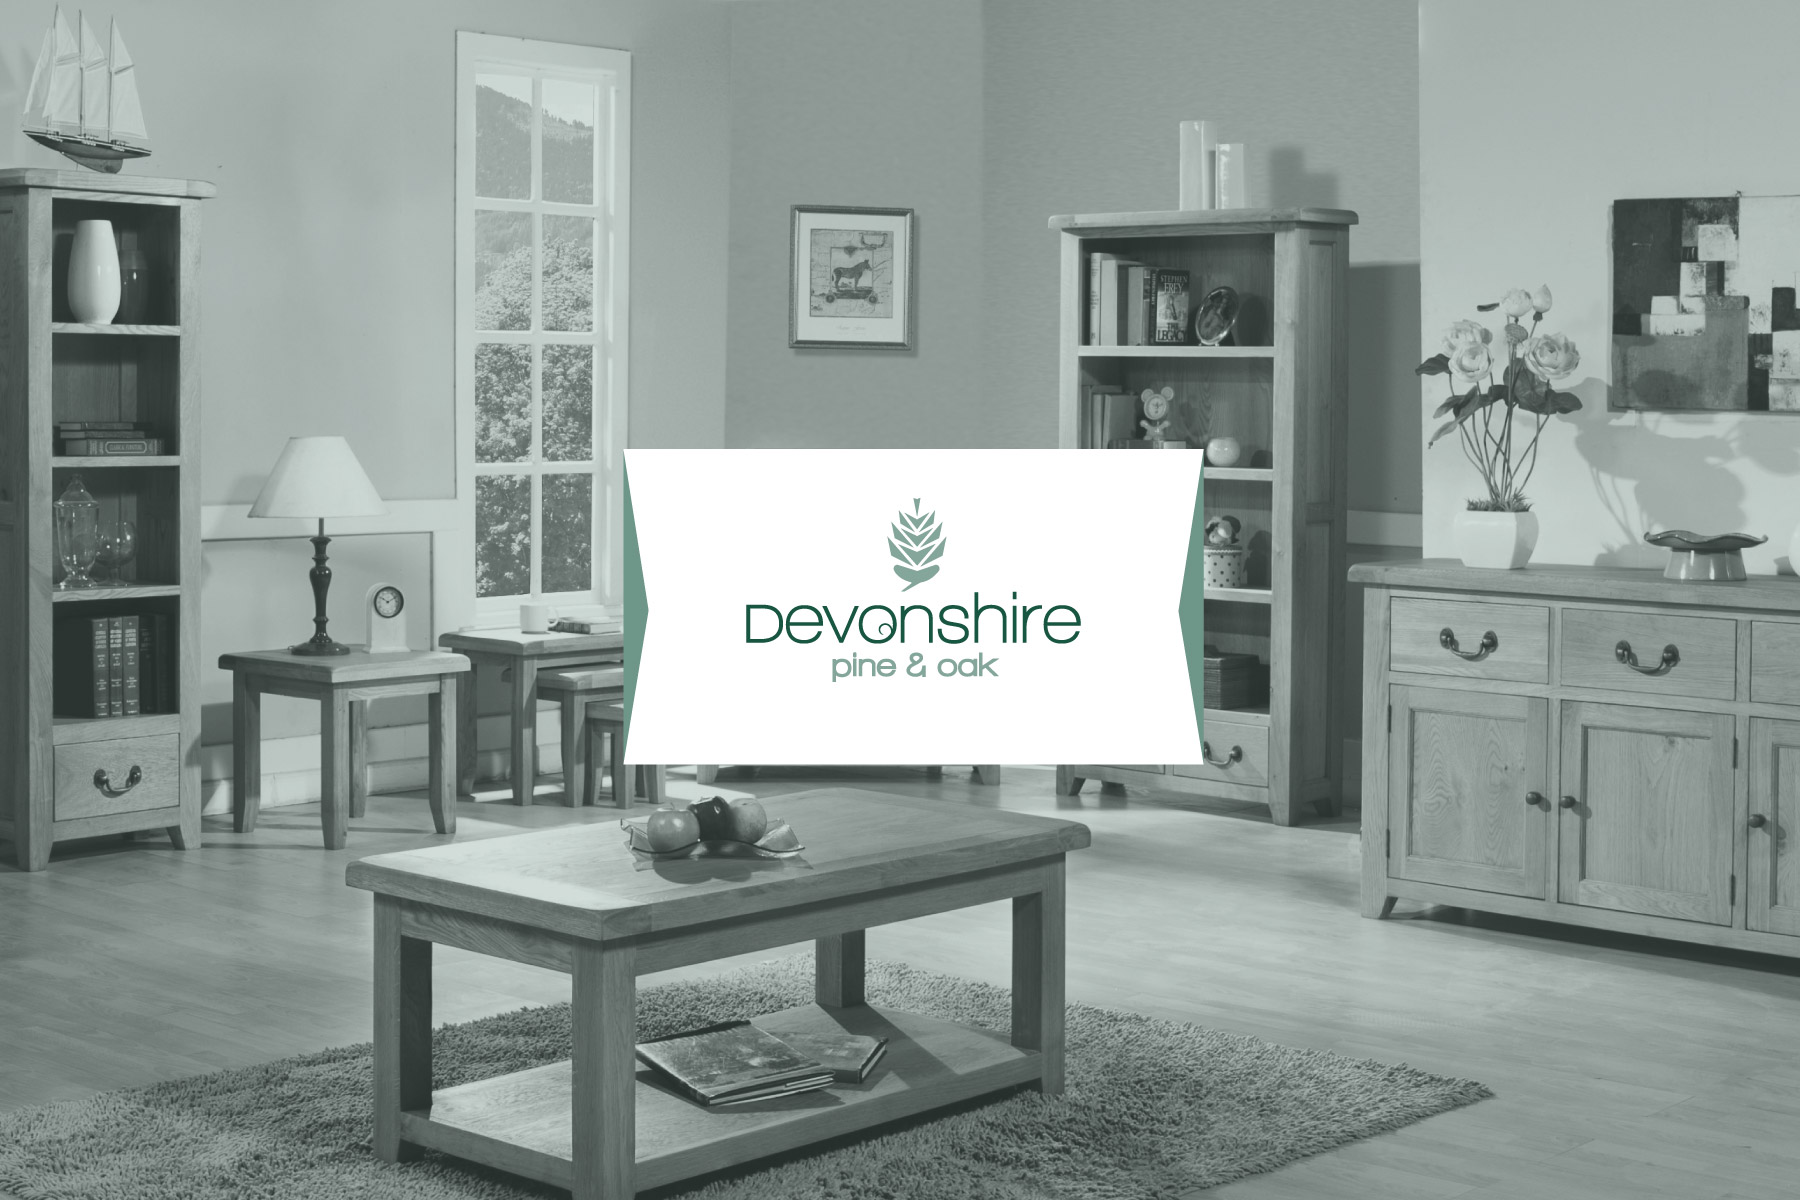 Devonshire logo and furniture